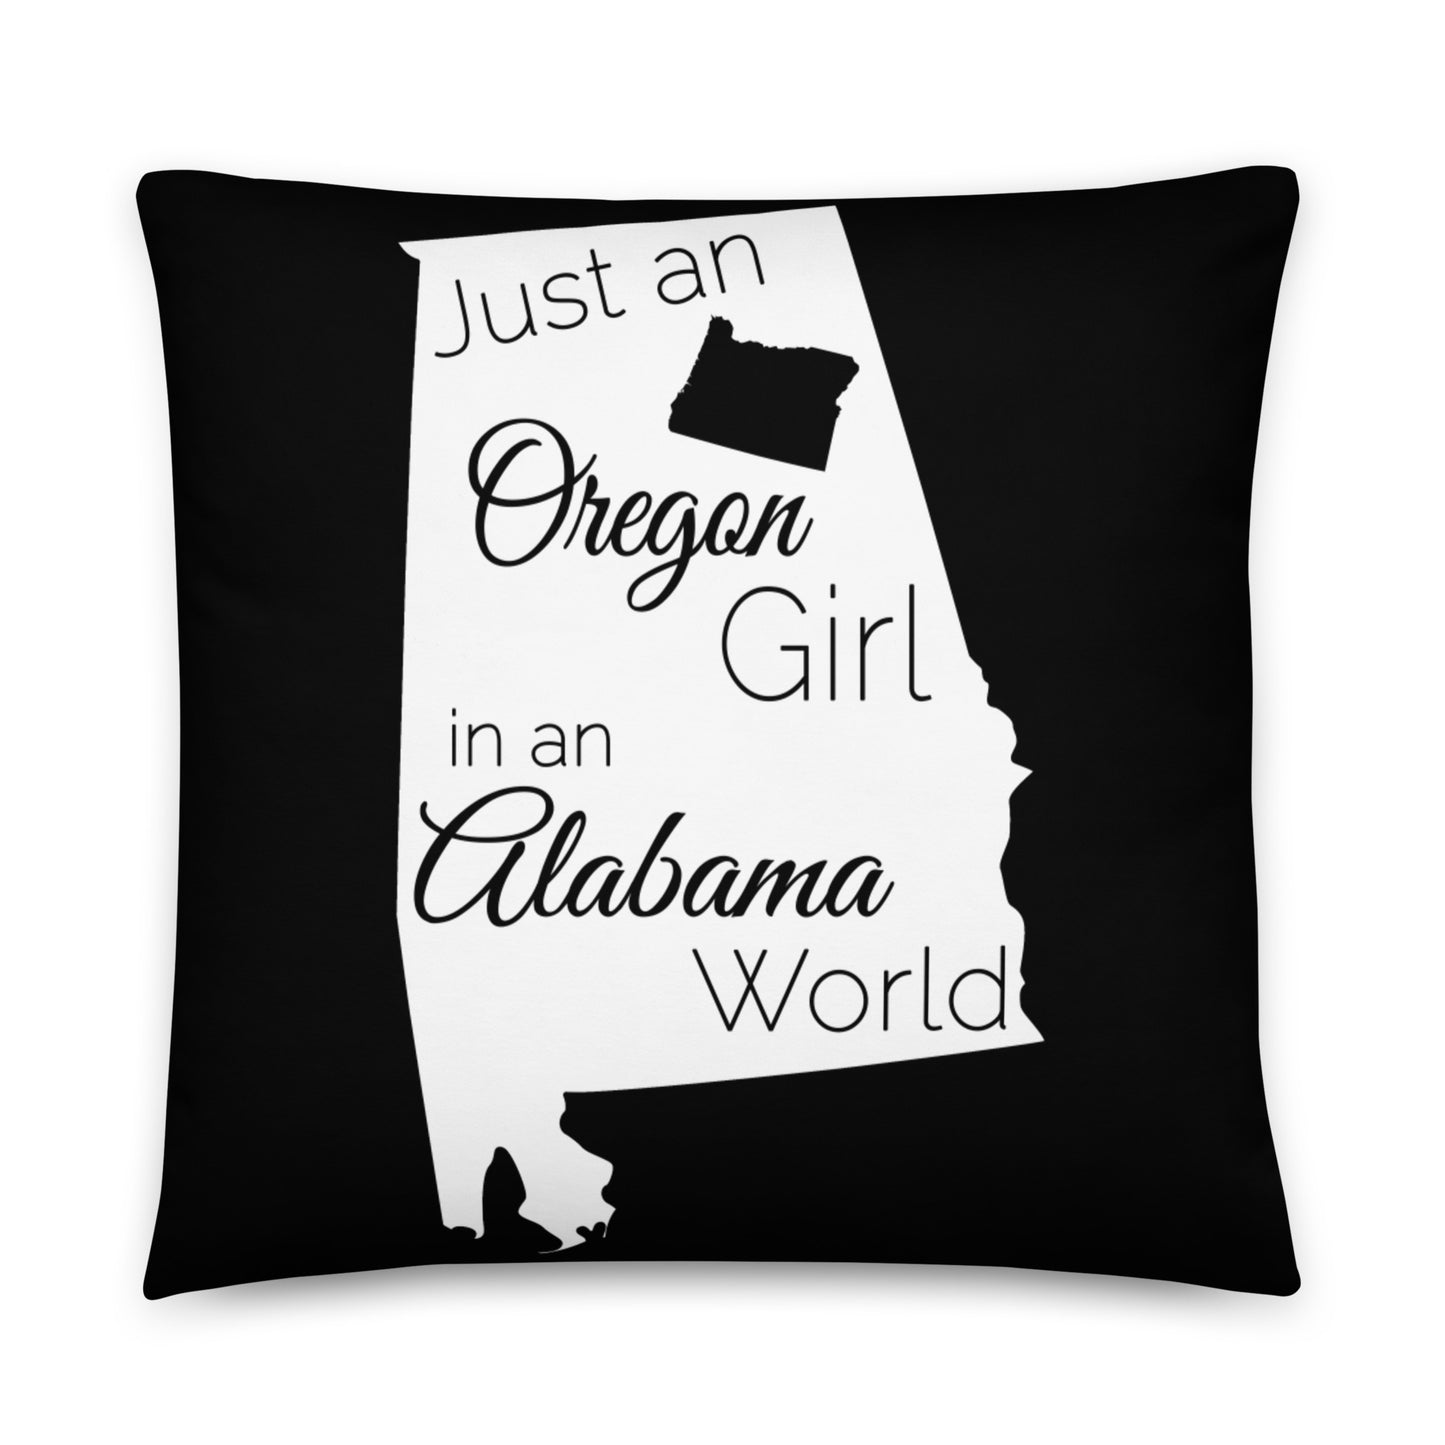 Just an Oregon Girl in an Alabama World Basic Pillow